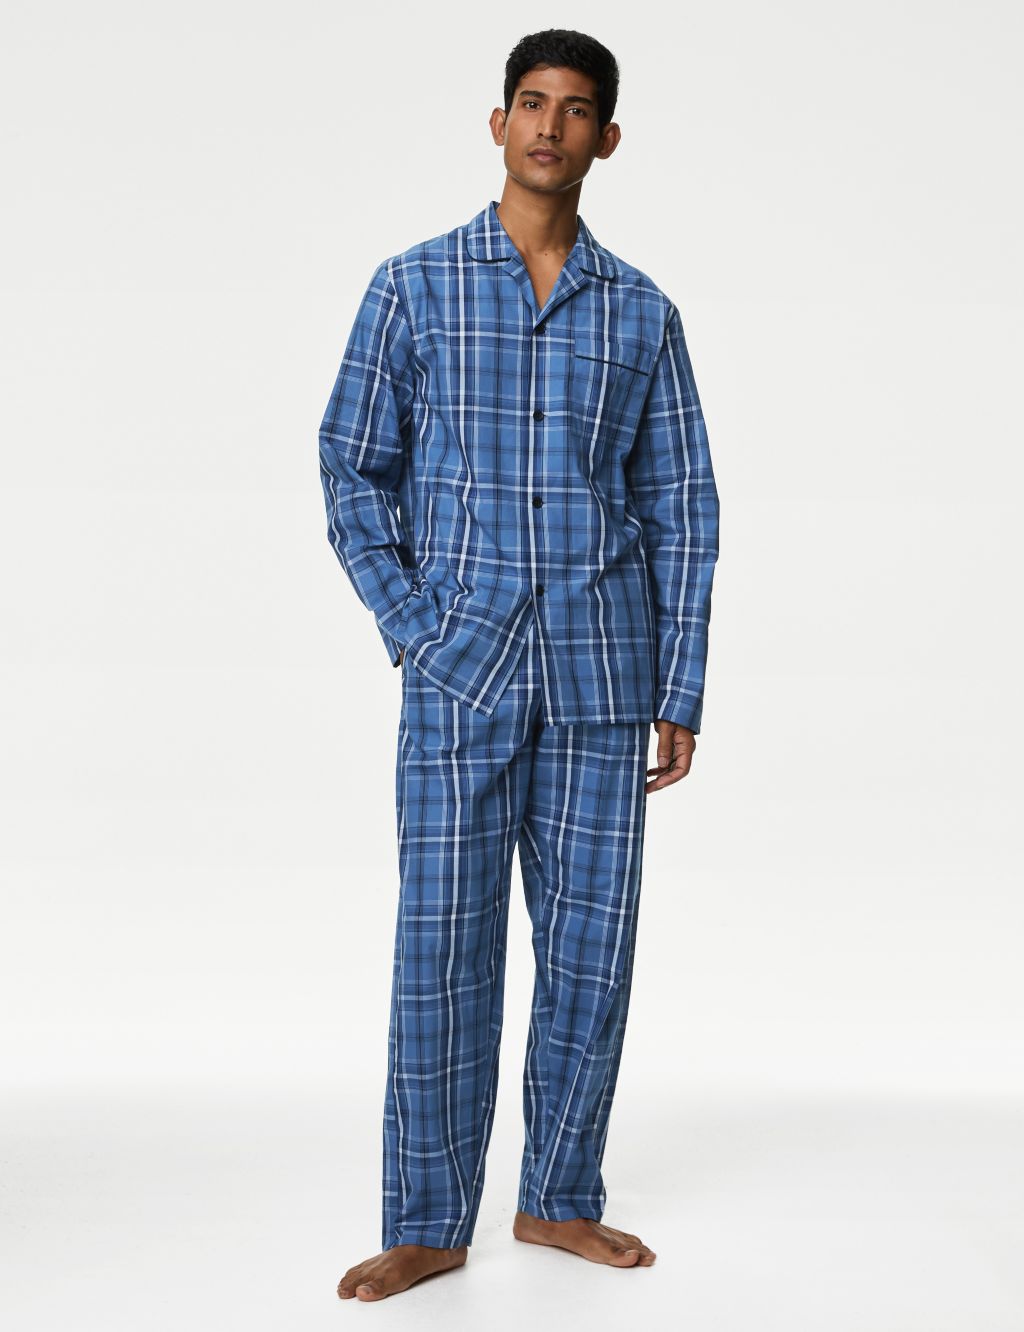 Mens Red Check Cotton Loungewear Pyjama Bottoms, Shop Mens Loungewear  Online